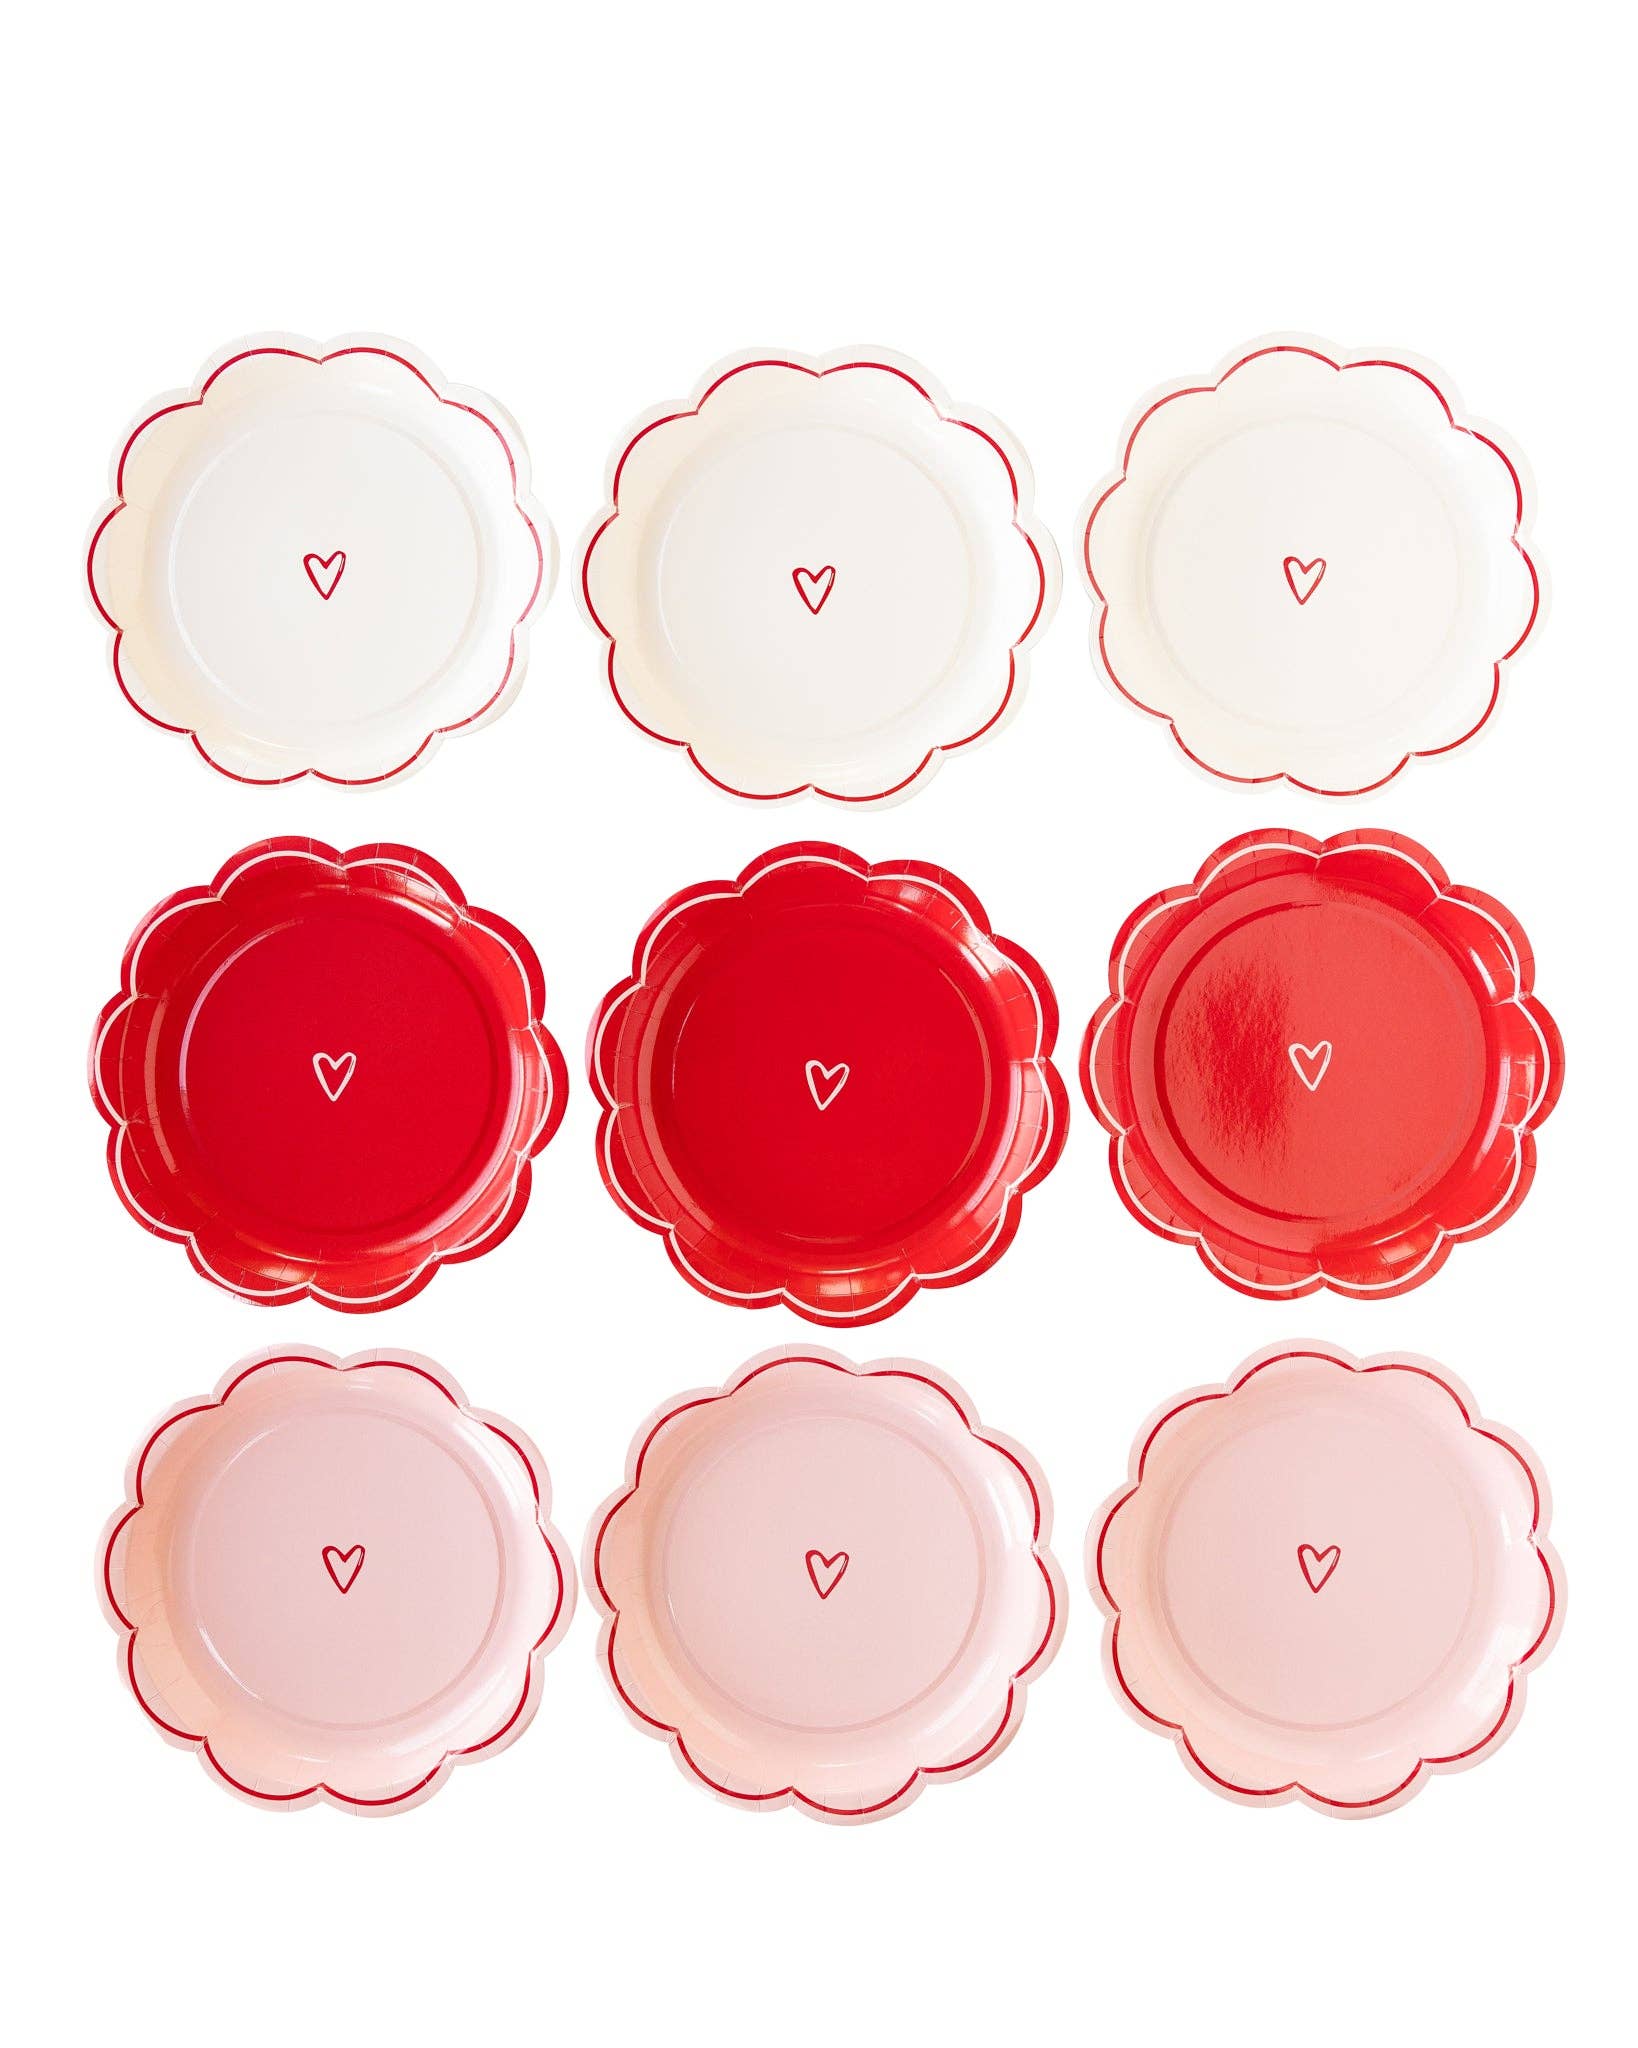 Middle Hearts Dessert Plate Set